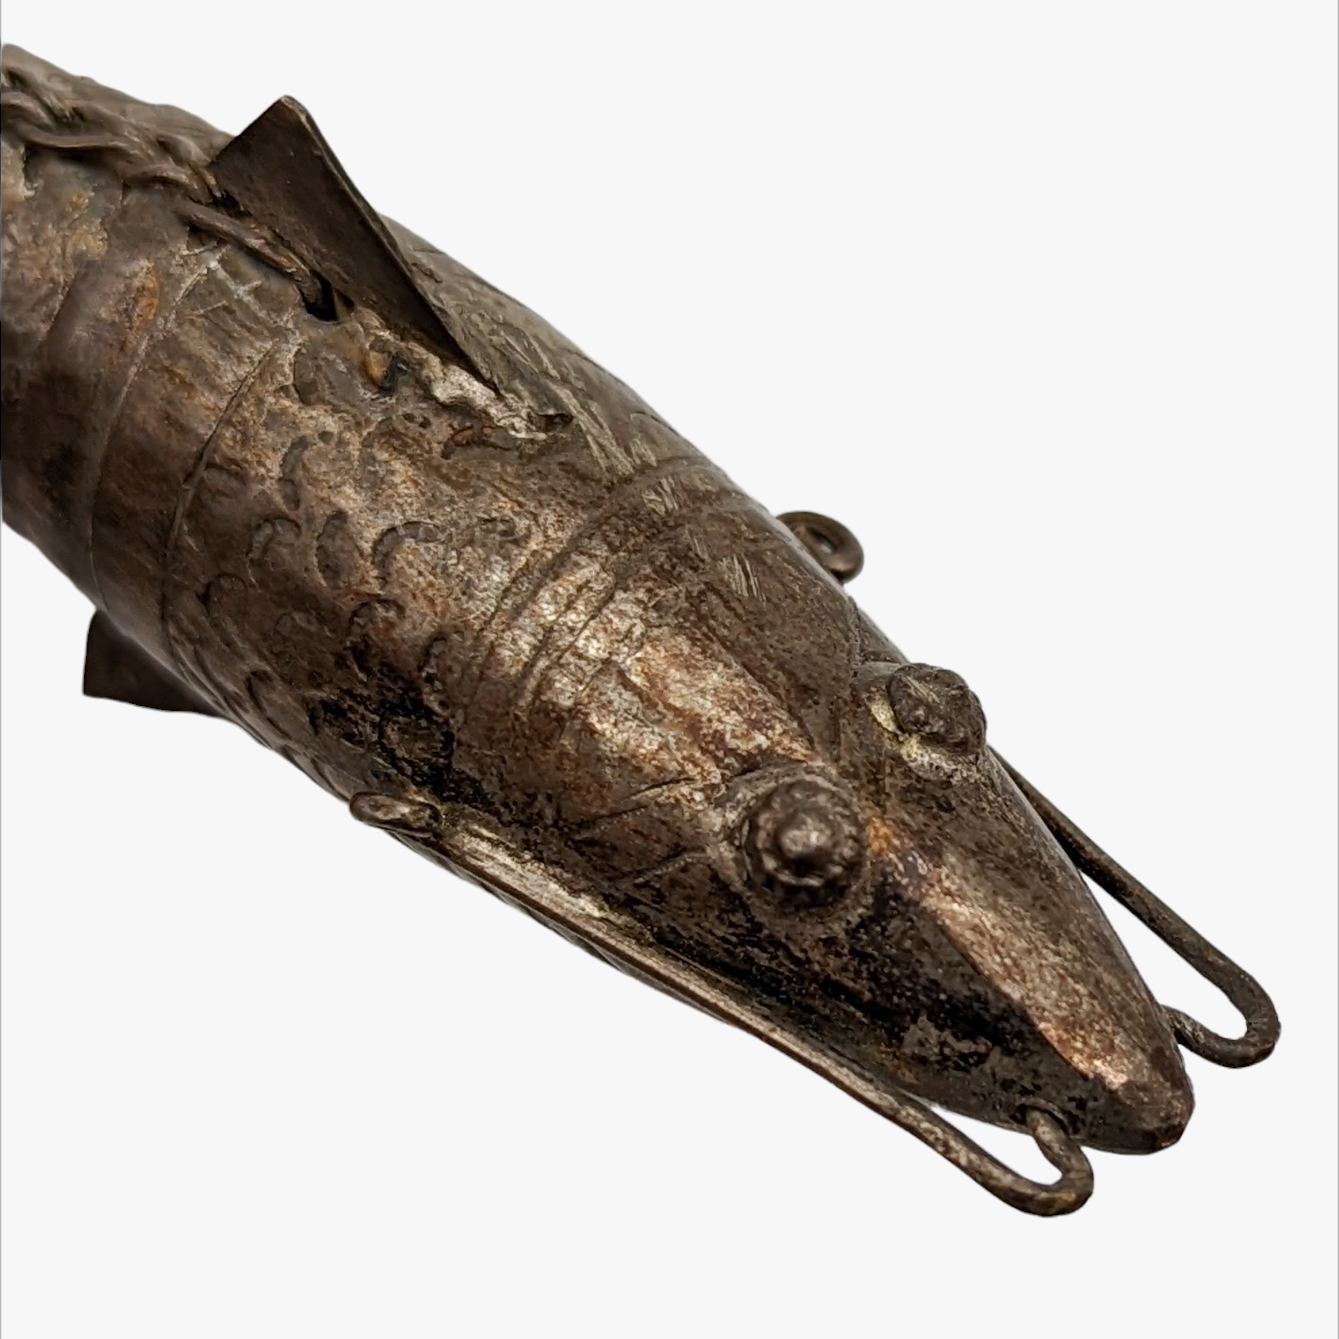 Antique Judaica Silver Articulated Fish Figurine